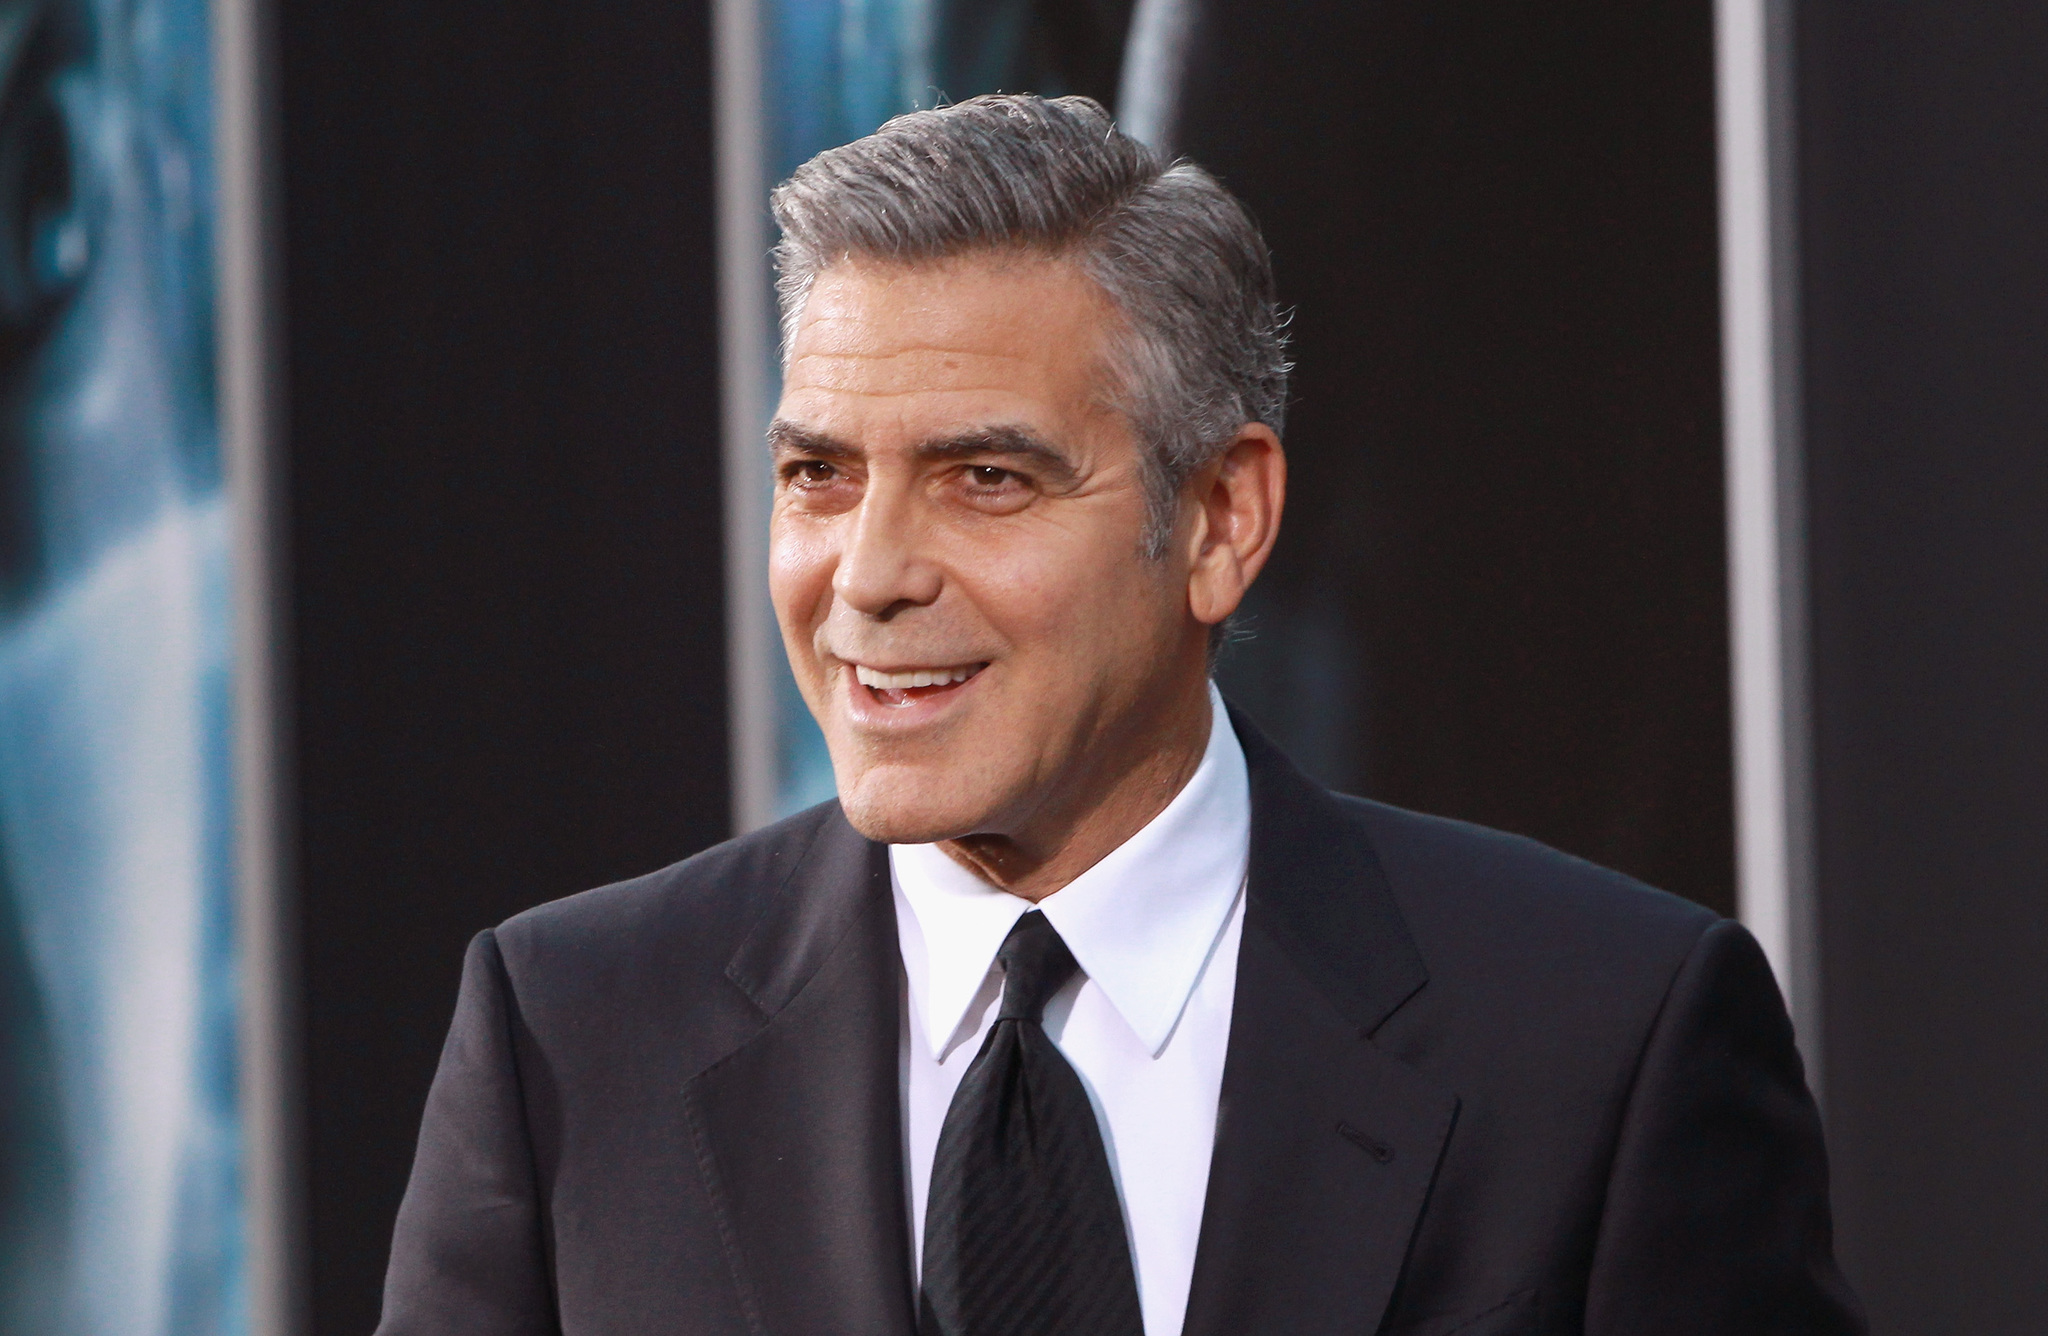 George Clooney at event of Gravitacija (2013)